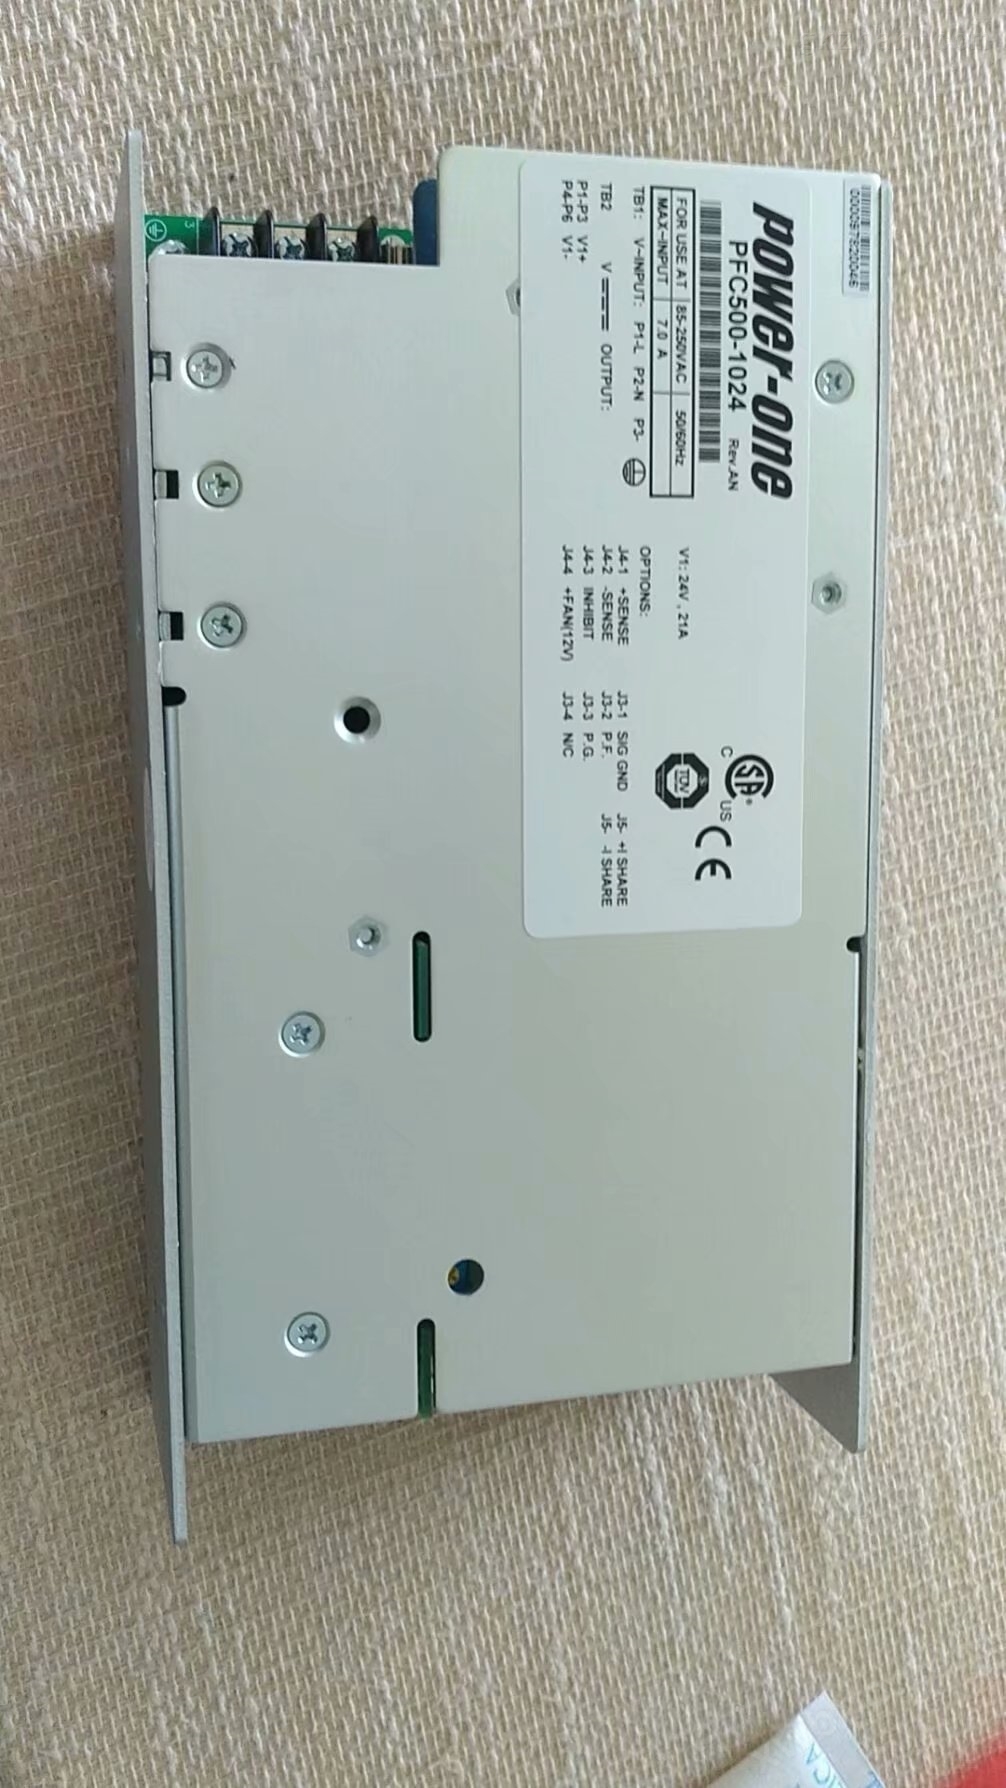 POWER-ONE可并联或冗余电源PFC500-1024G